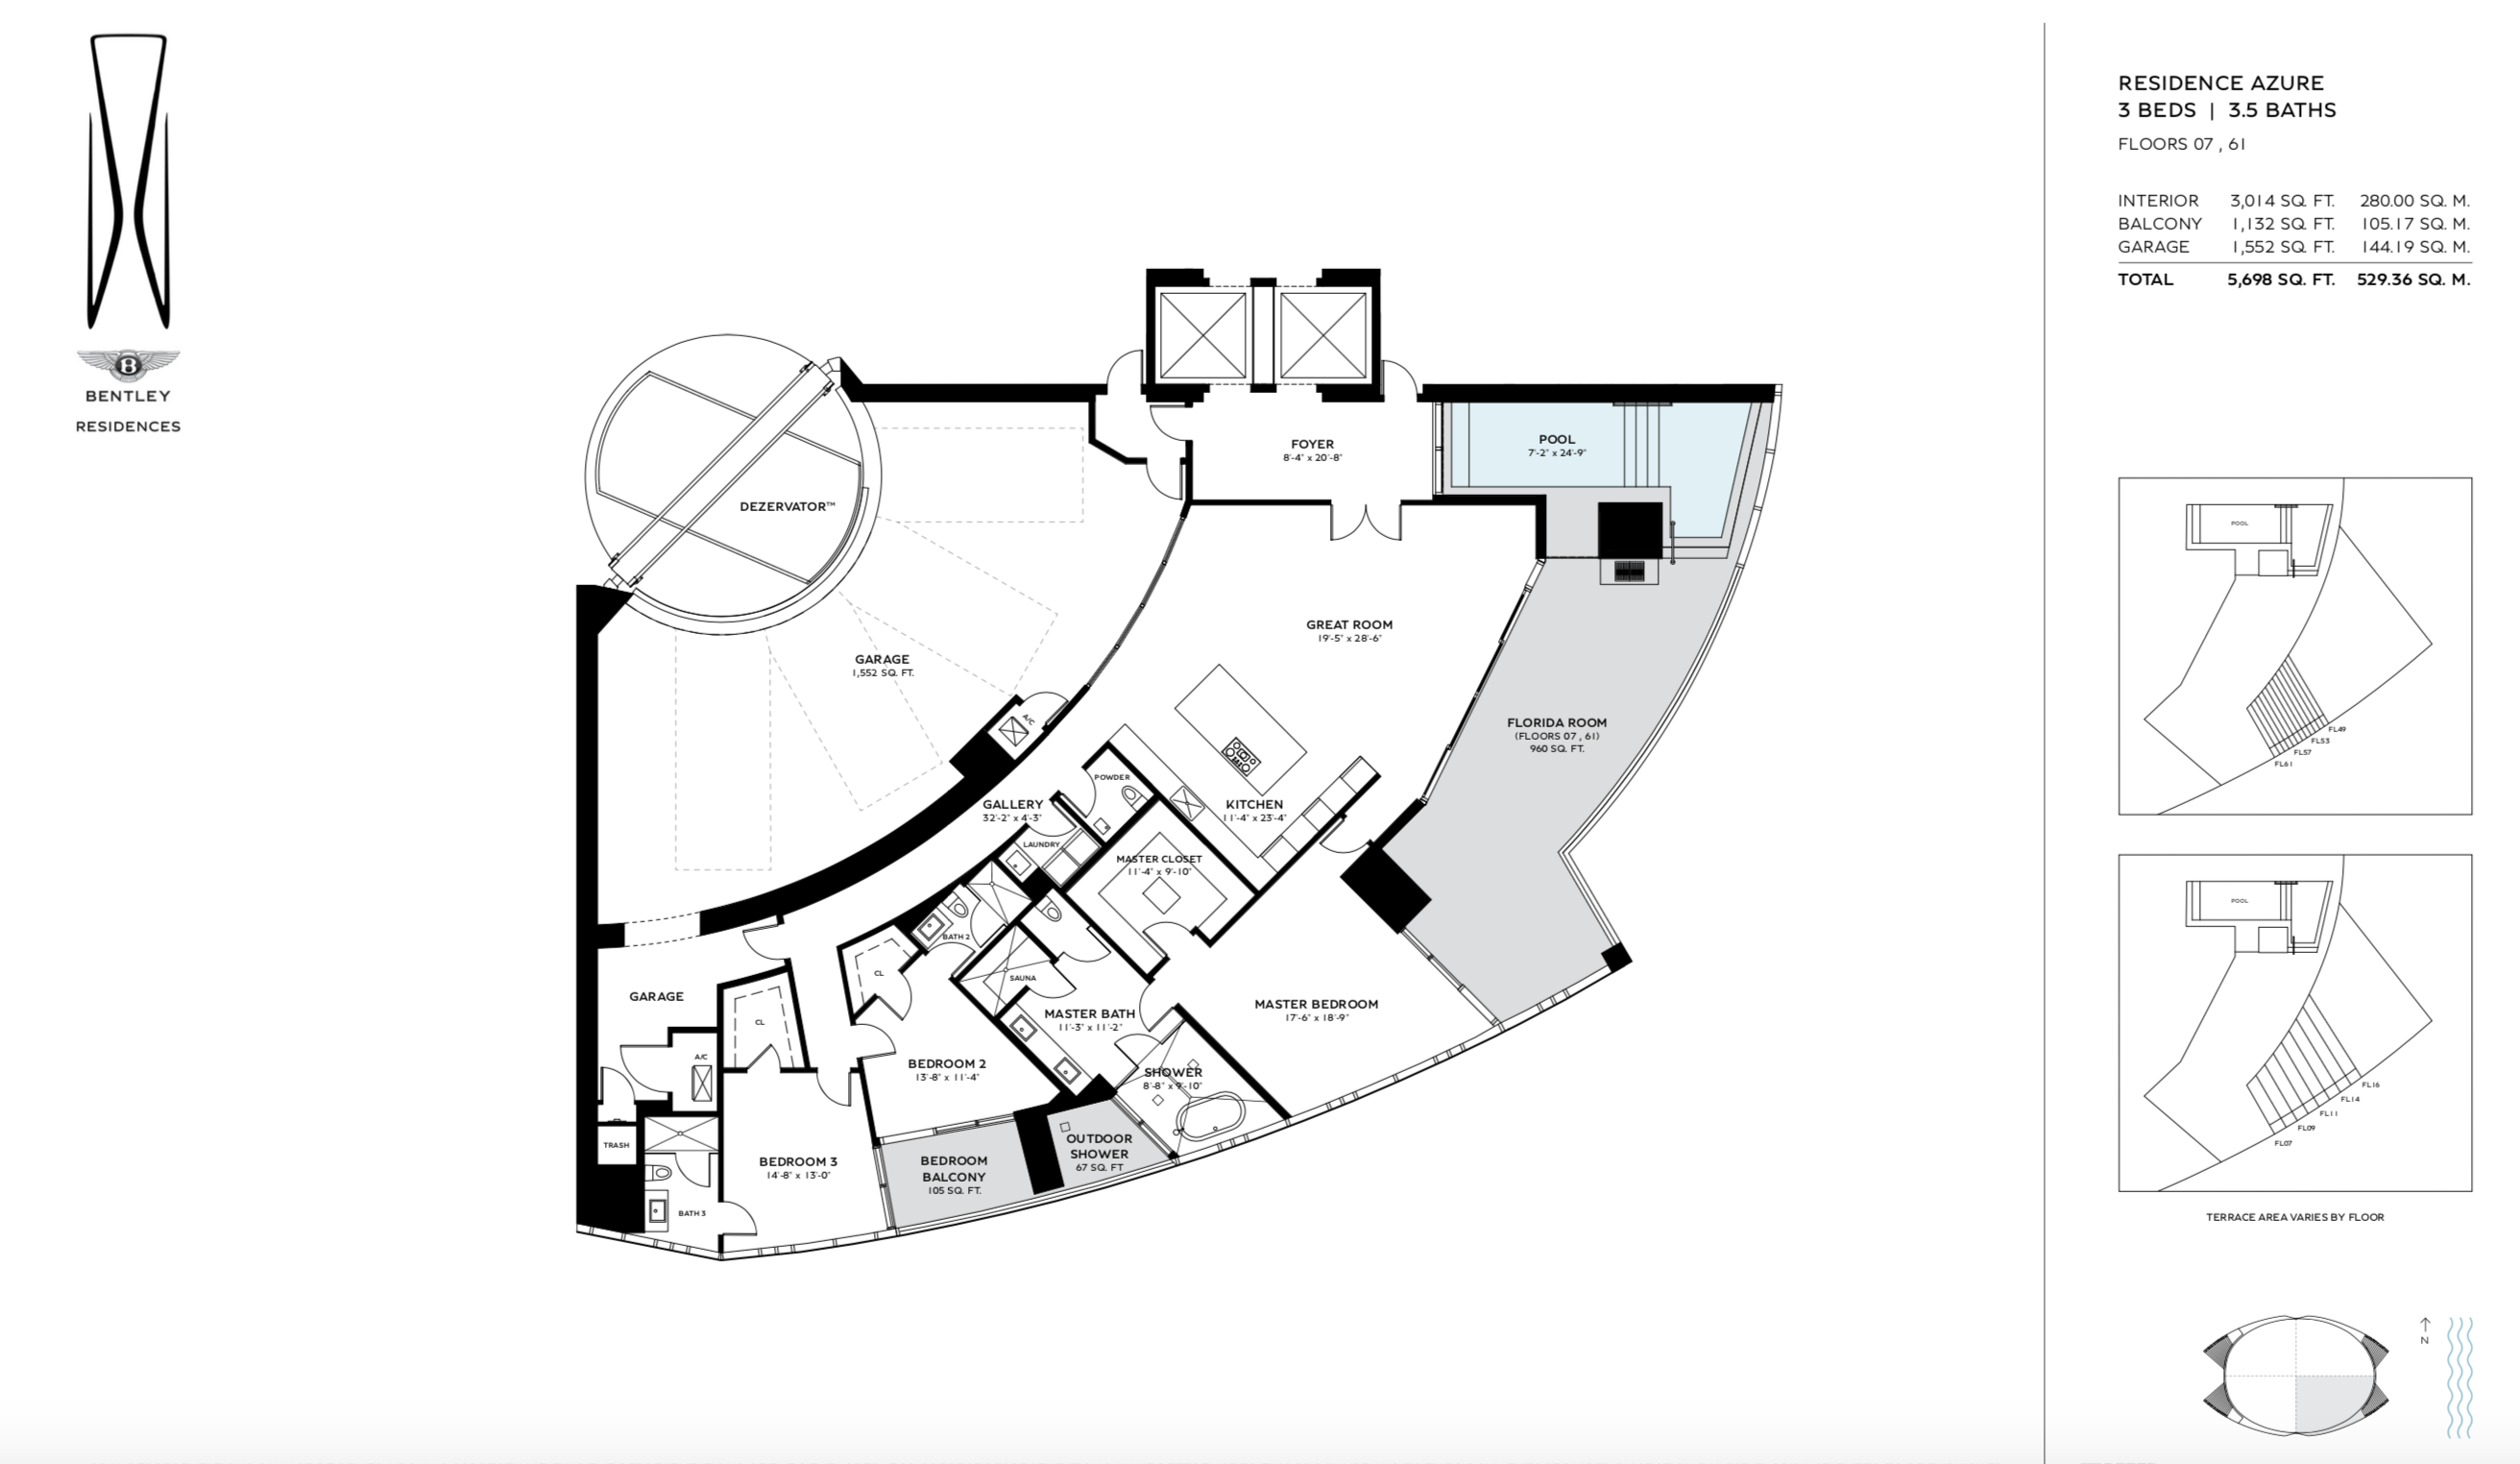 Bentley Residences Sunny Isles  | Residence Azure | SE Exposure | 3 Be/3.5Ba | 3,014 SF | Floors 07 & 61